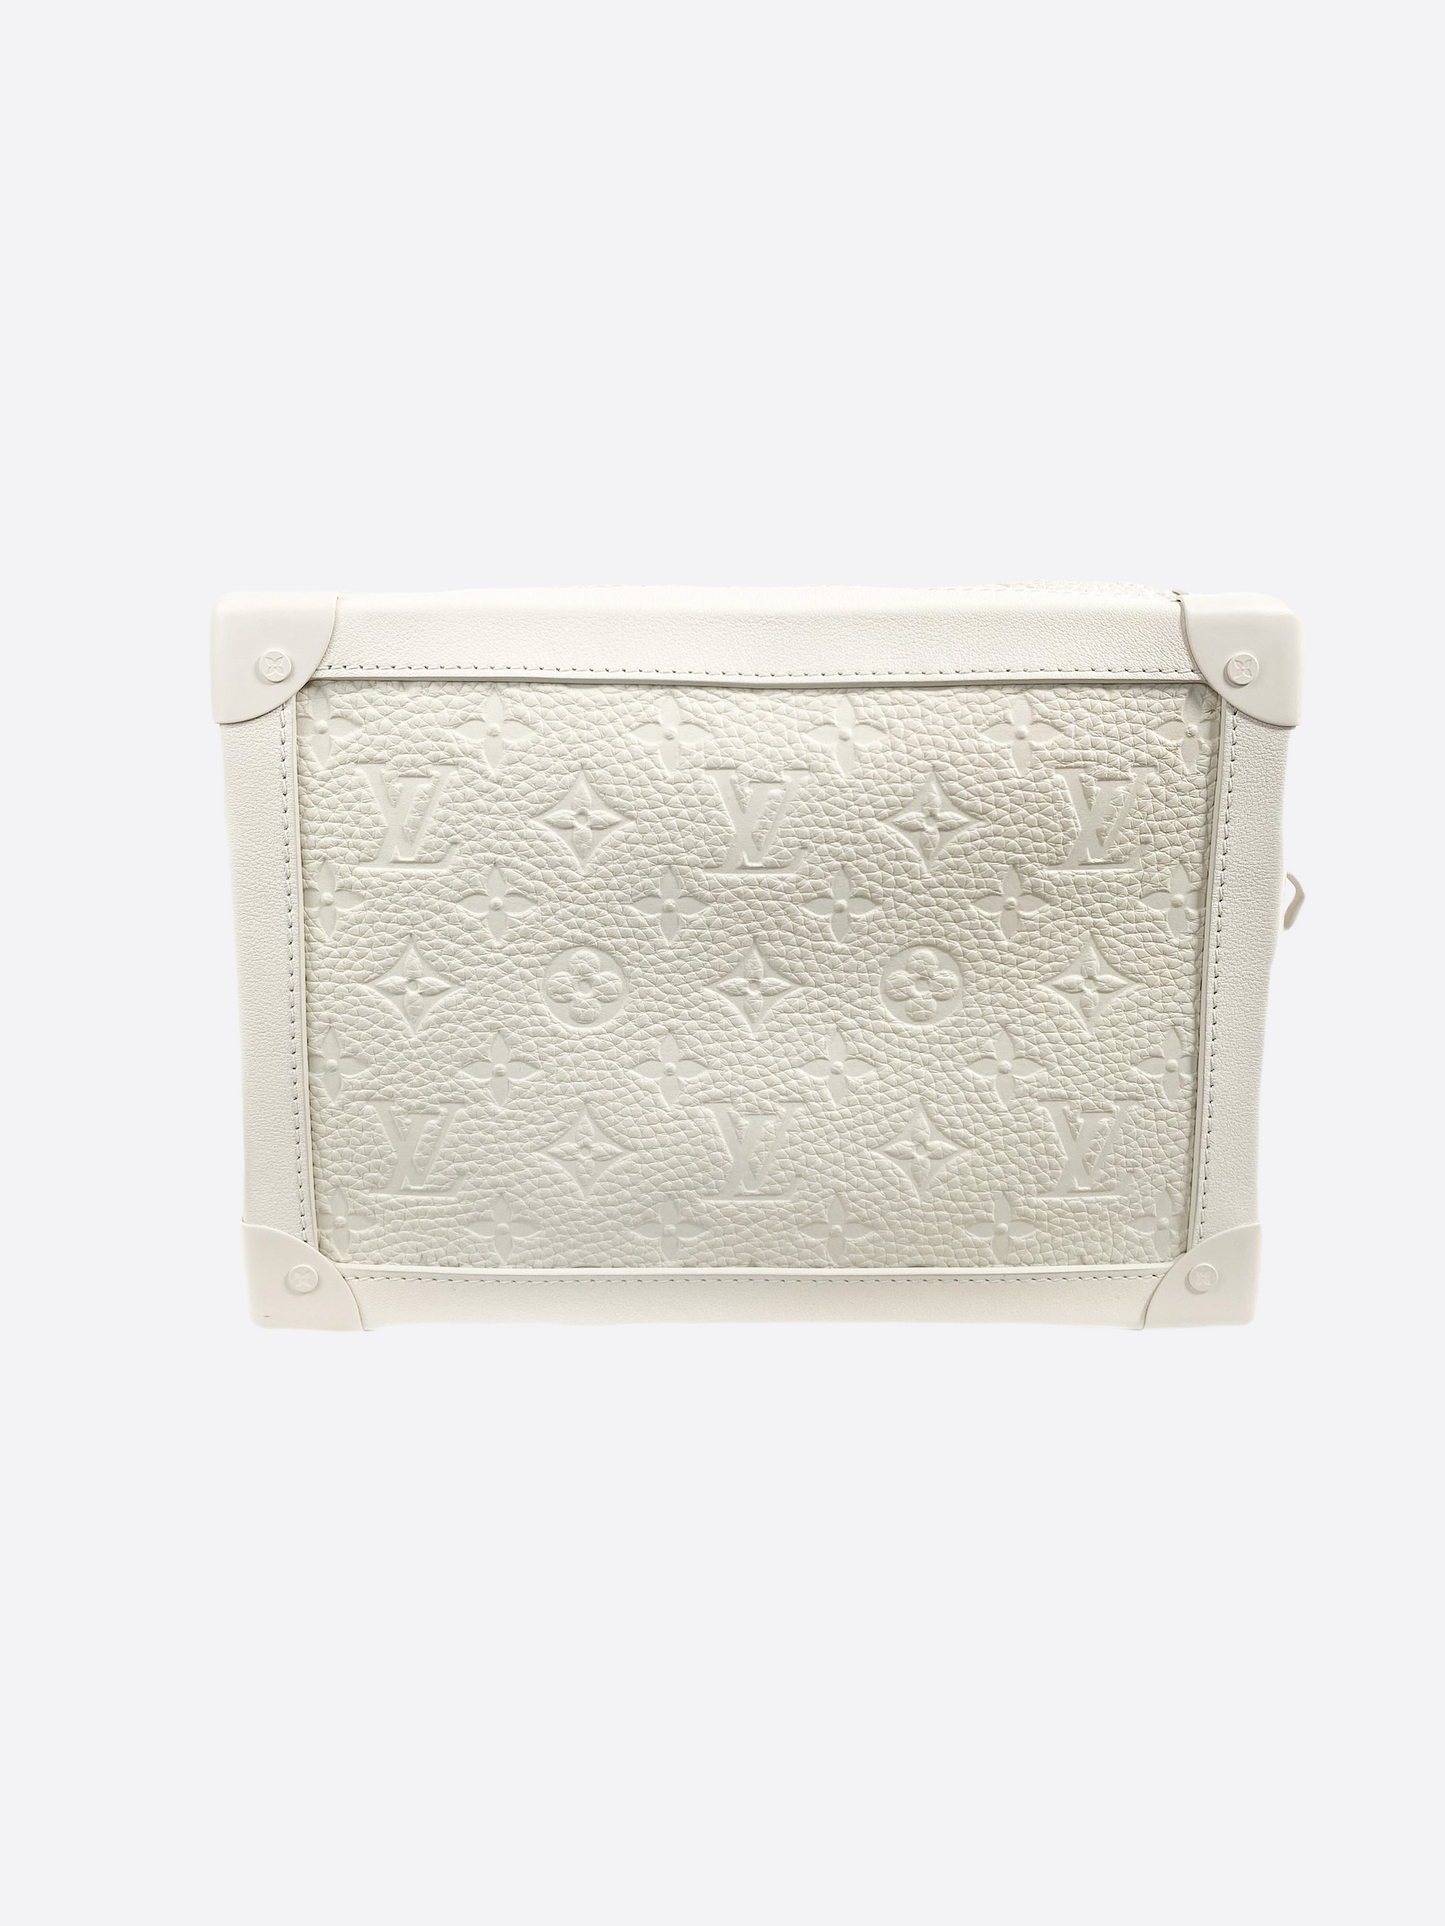 Louis Vuitton Soft White Powder Trunk